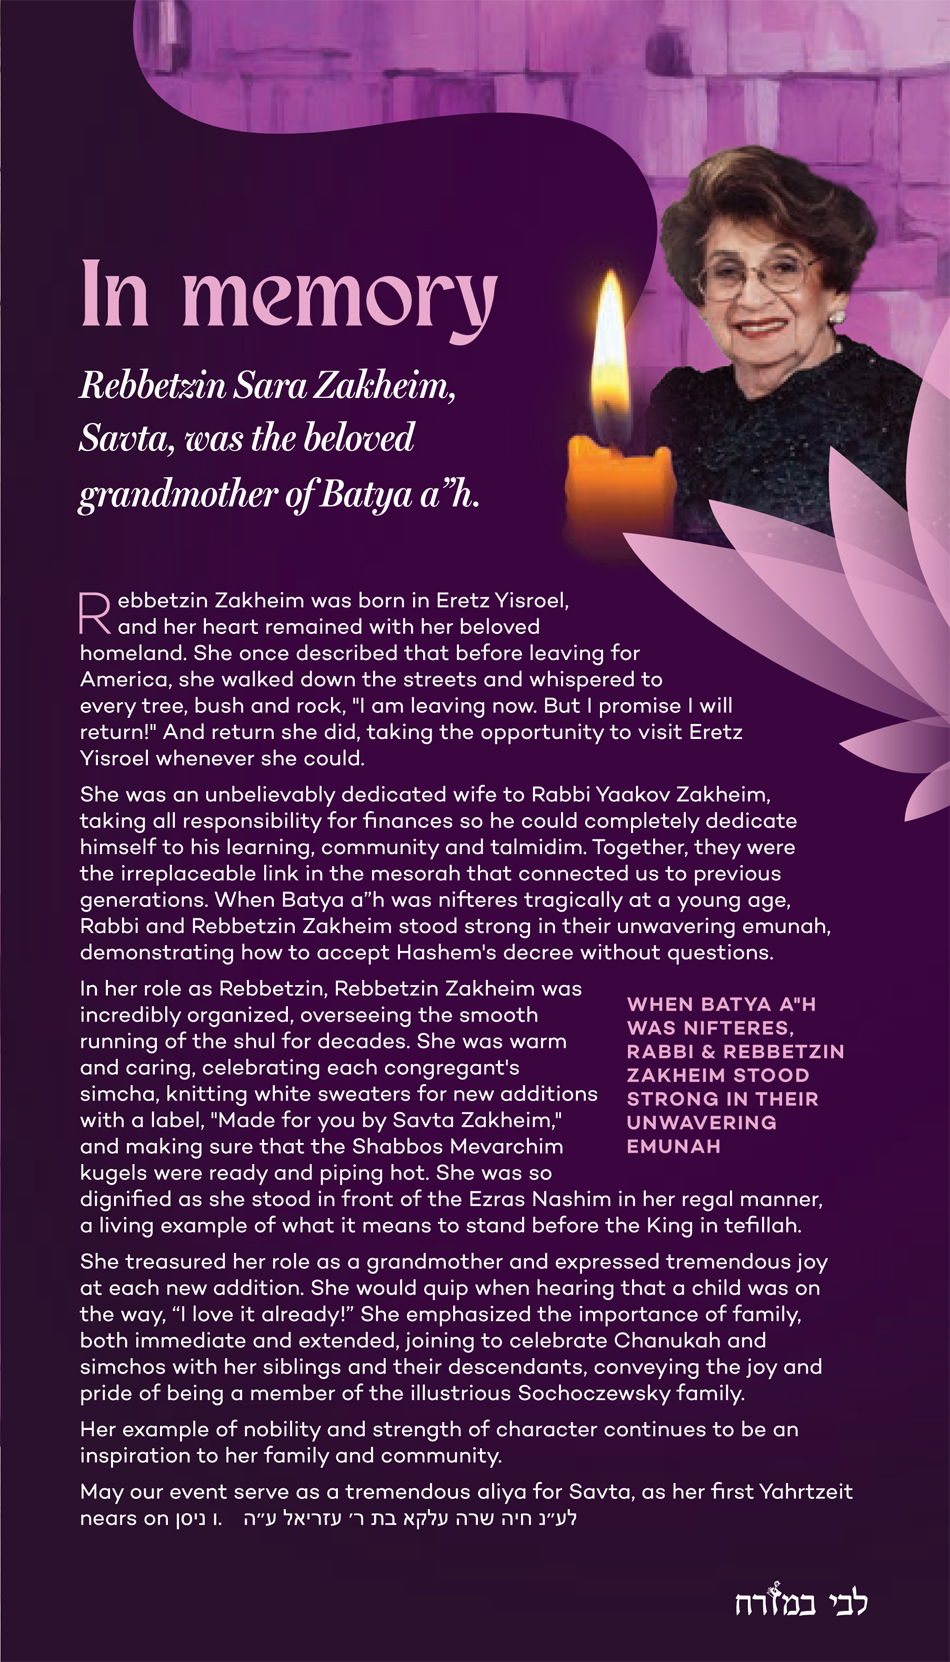 in memory of Rebbetzin Sara Zakheim